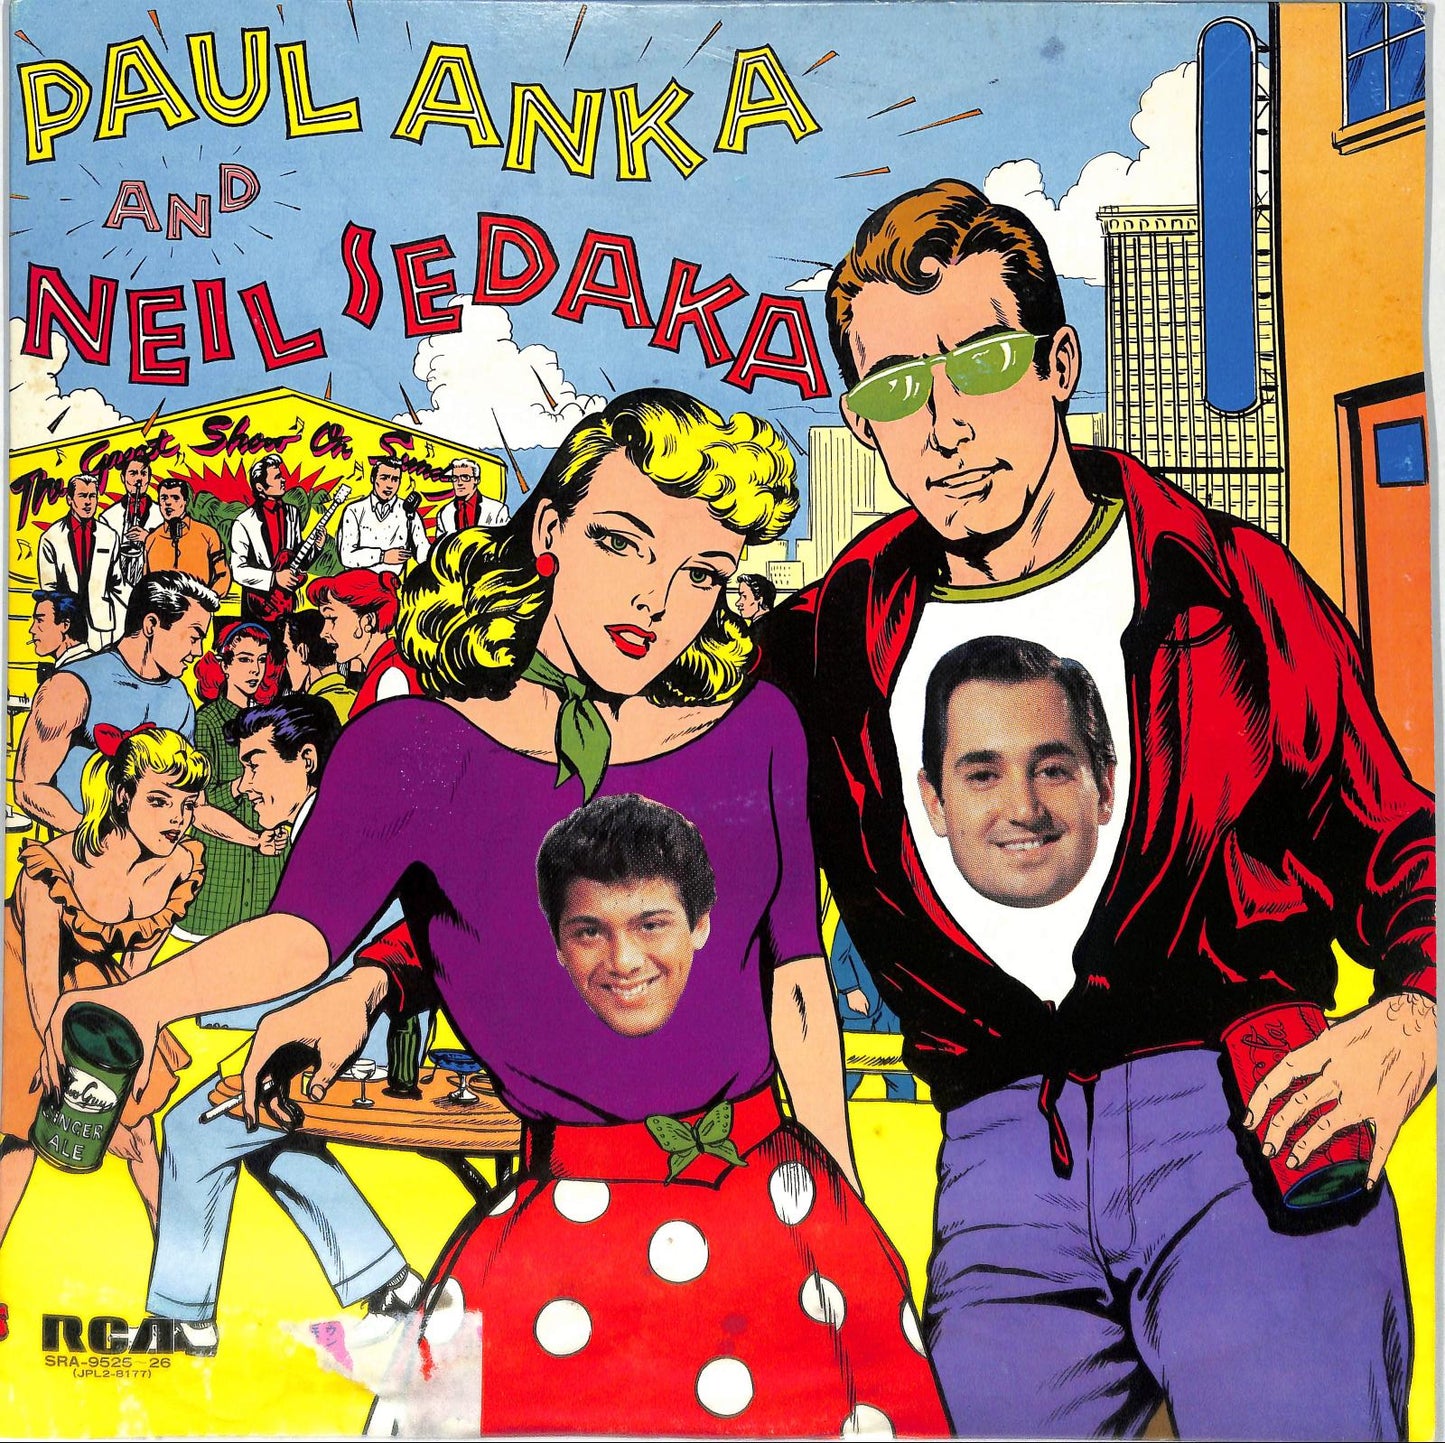 NEIL SEDAKA, PAUL ANKA - The Great Hits Of Paul Anka And Neil Sedaka